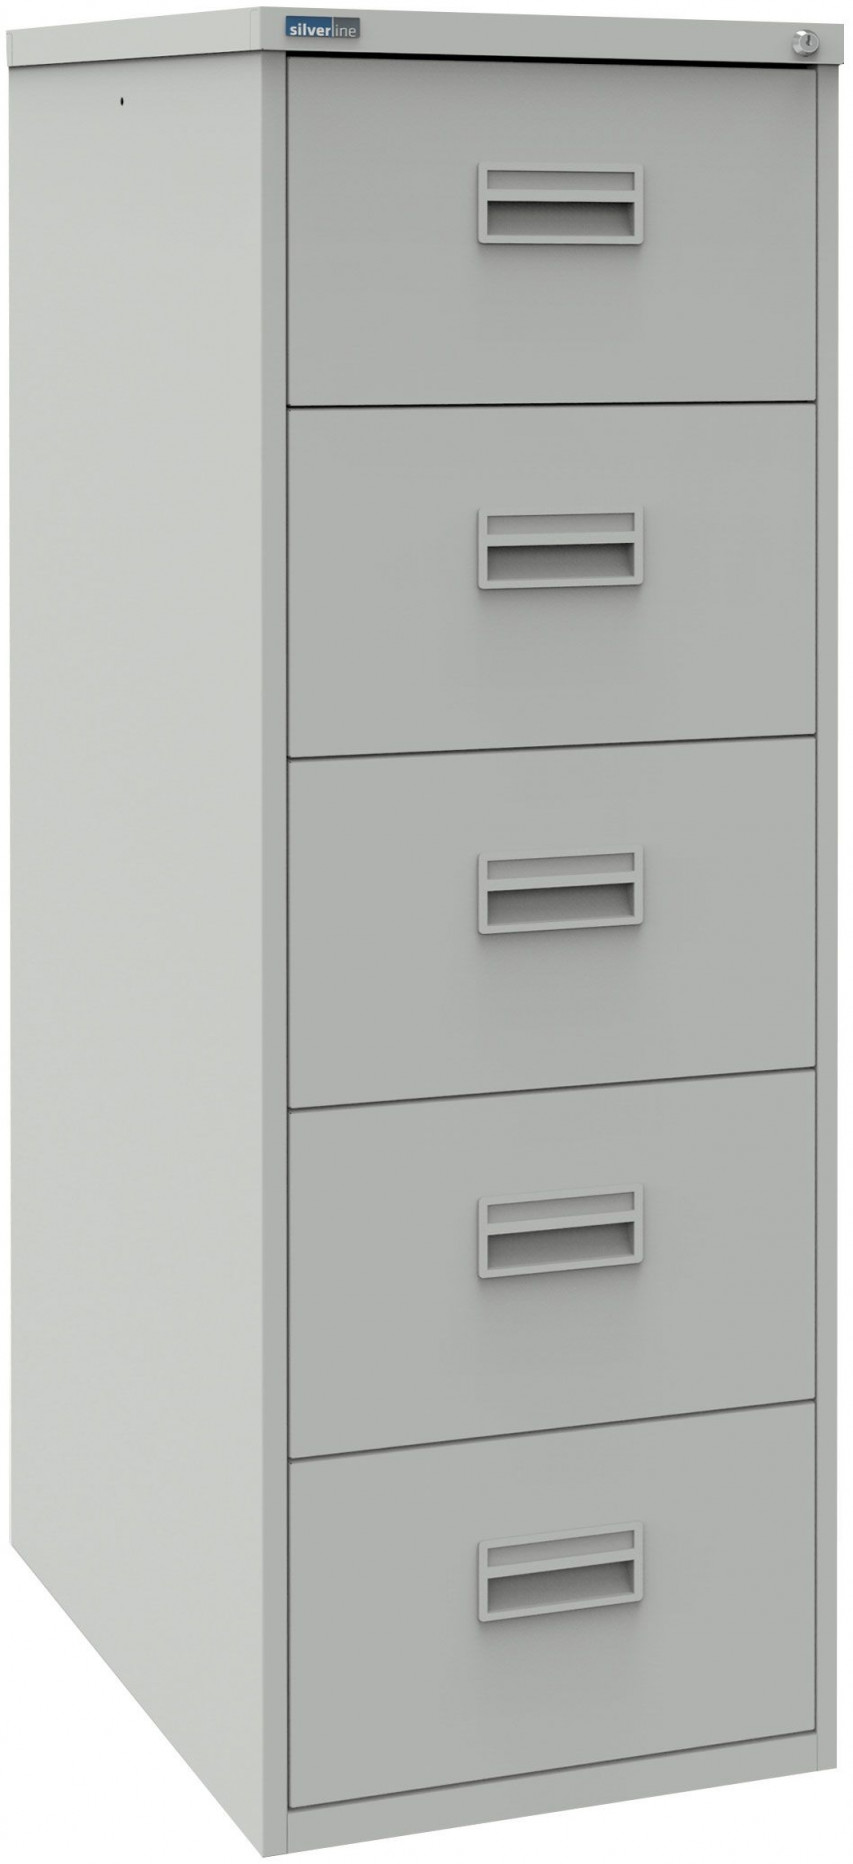 Silverline  Drawer Filing Cabinet